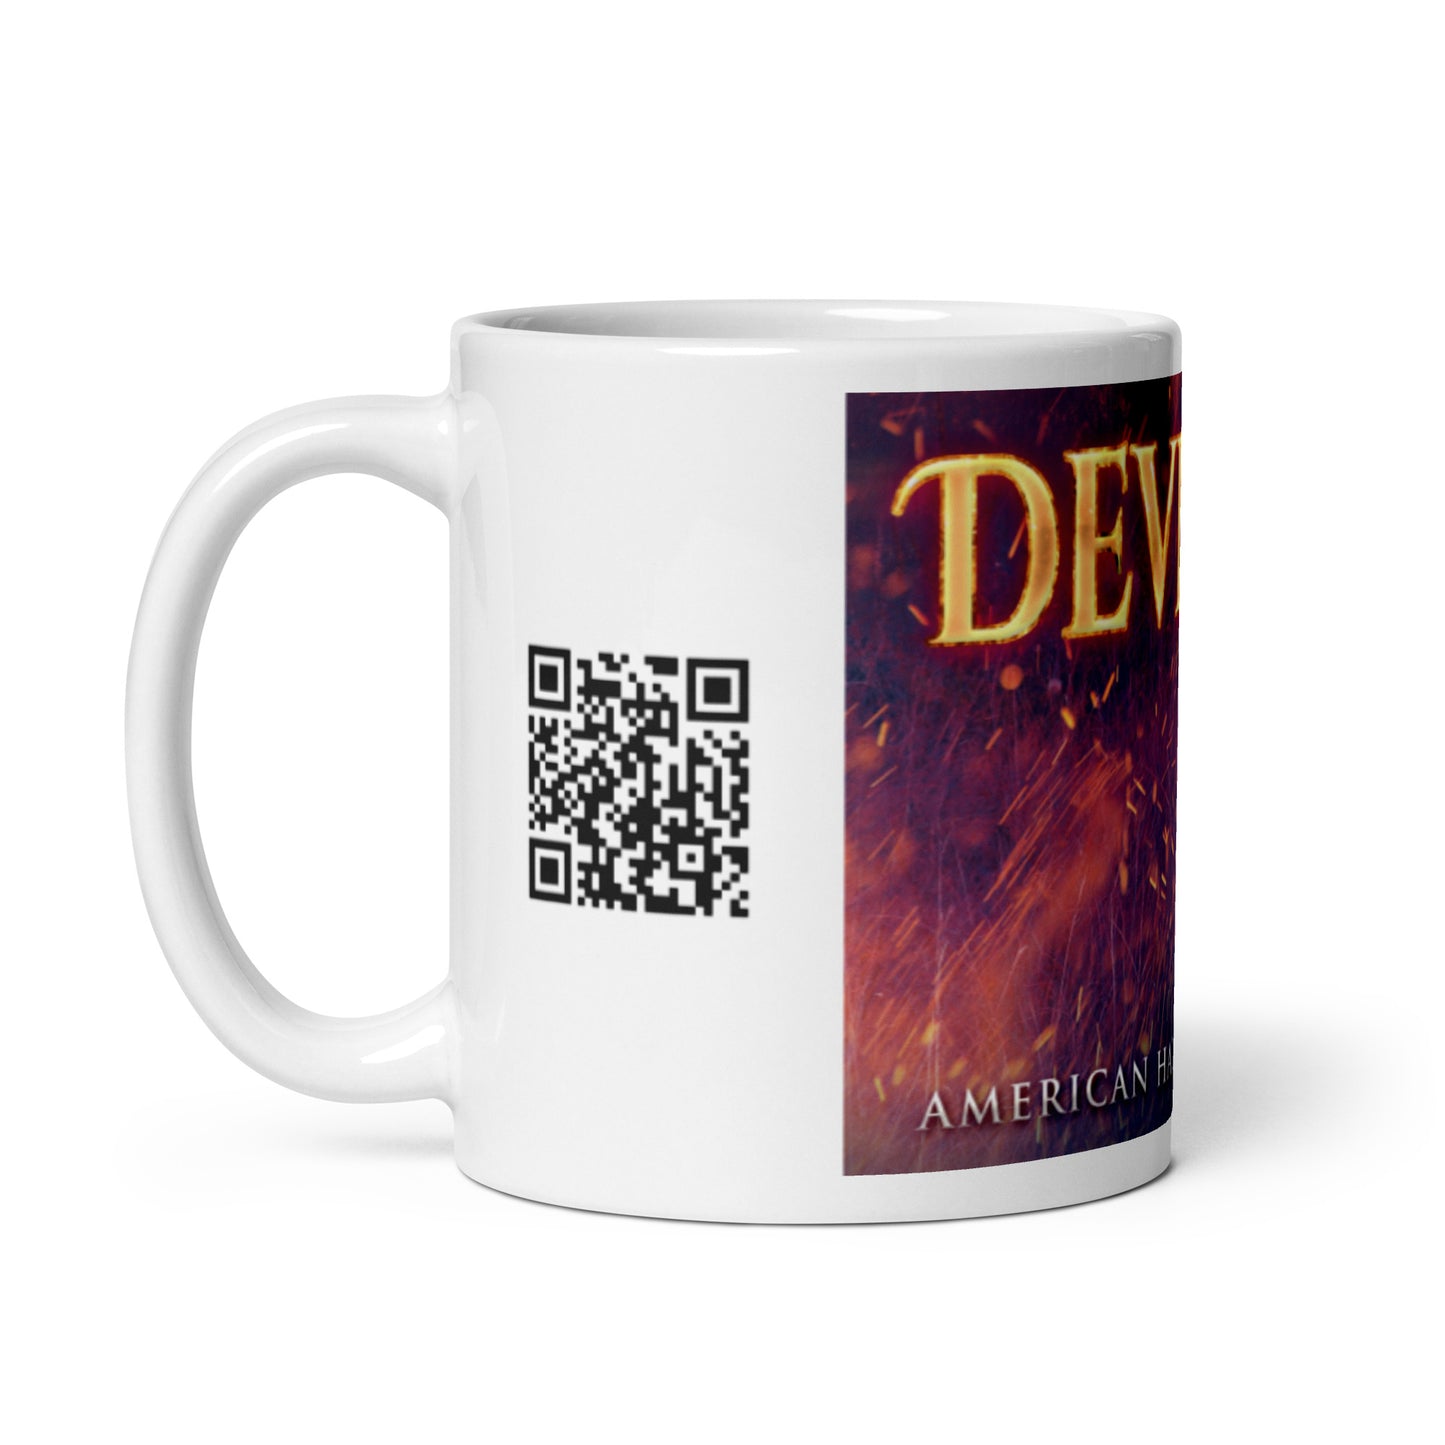 Devilfire - White Coffee Mug